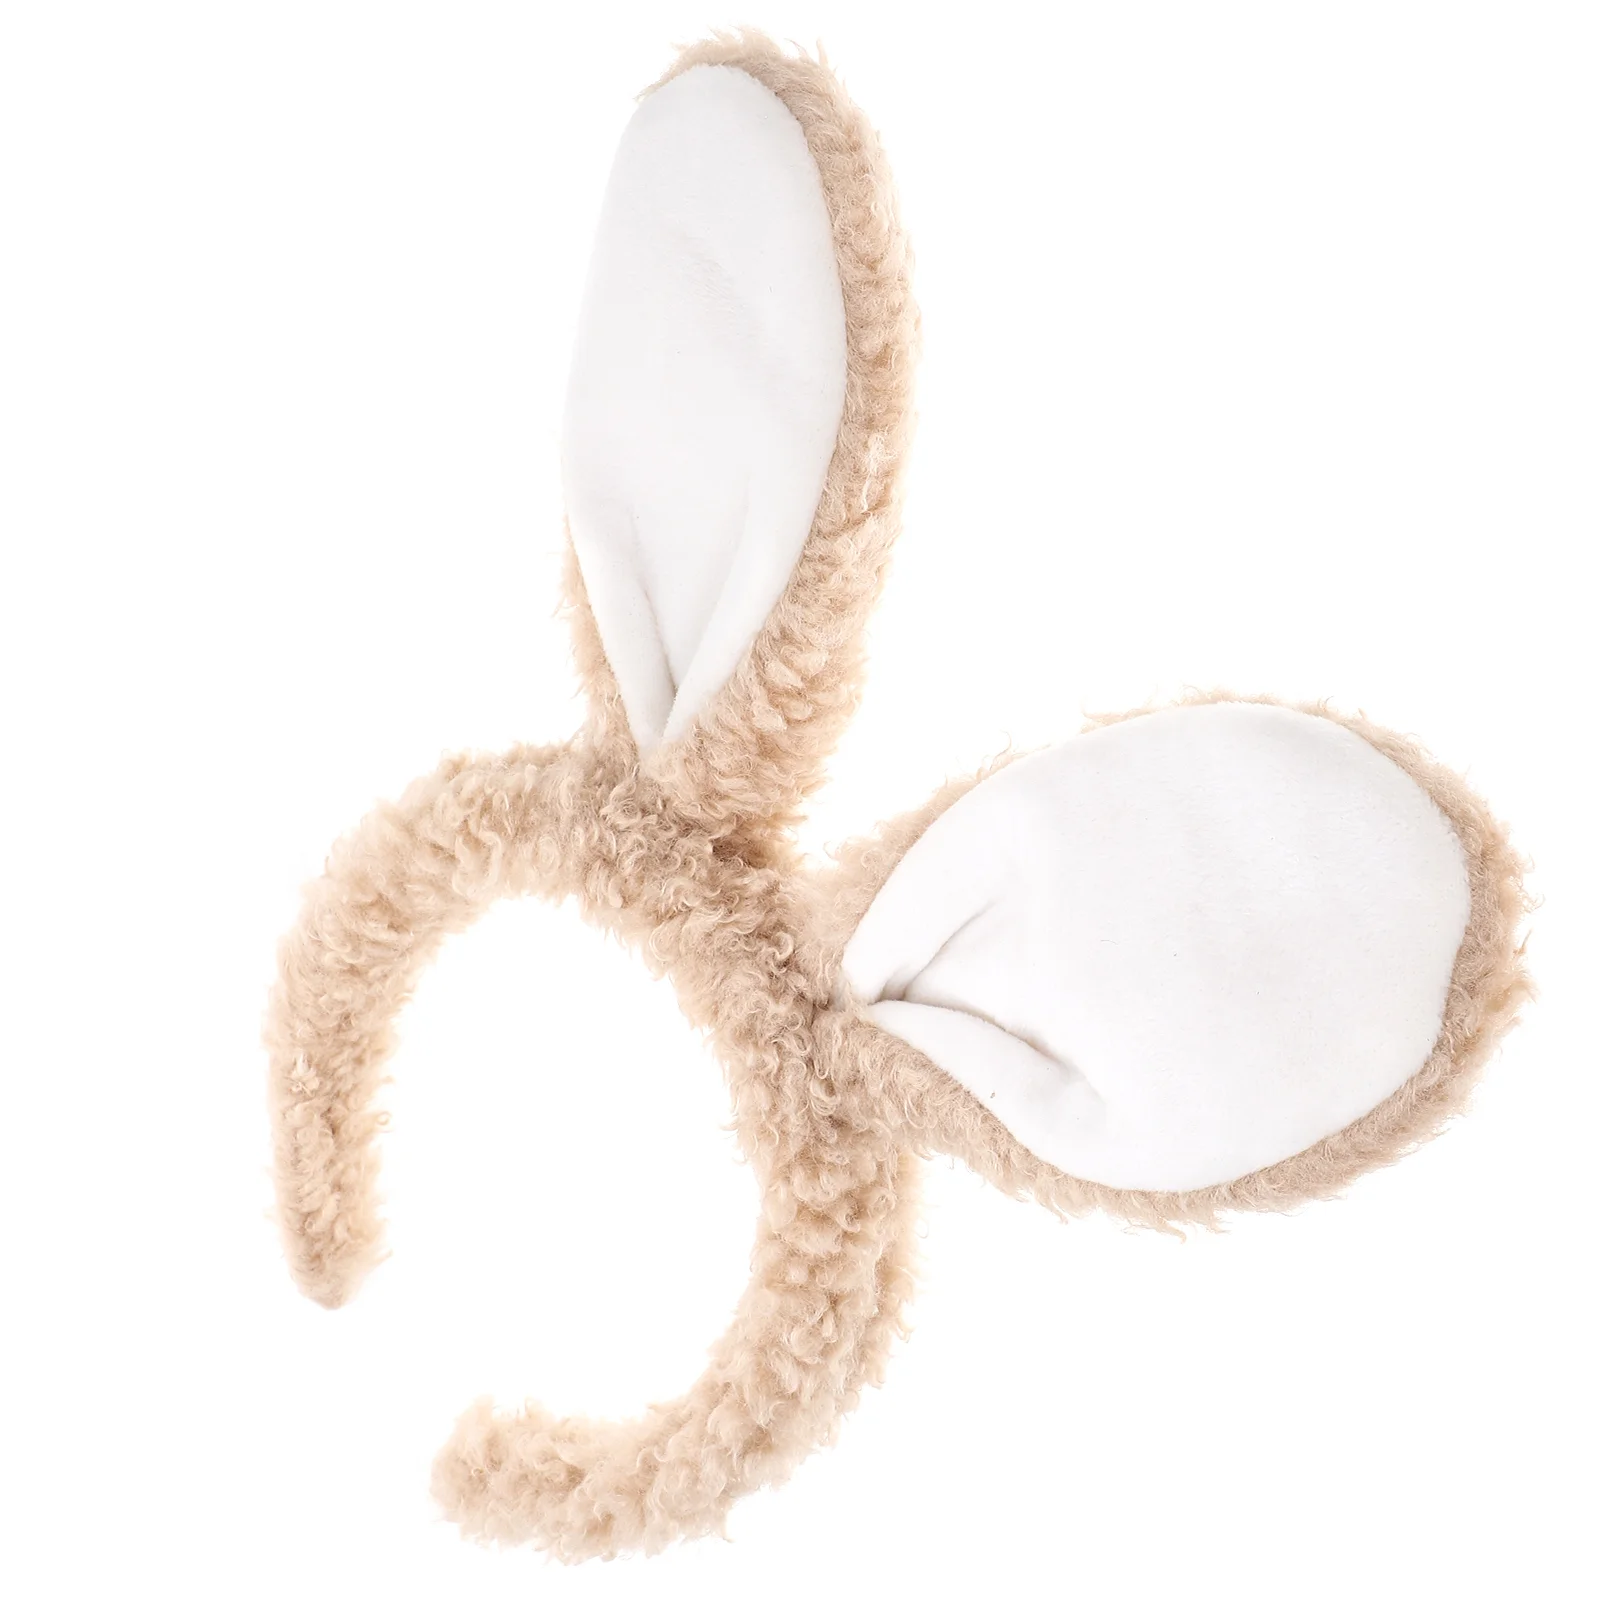 

Tiara Bunny Ear Headband Rabbit Accessories Costume Headgear Headbands for Women Ears